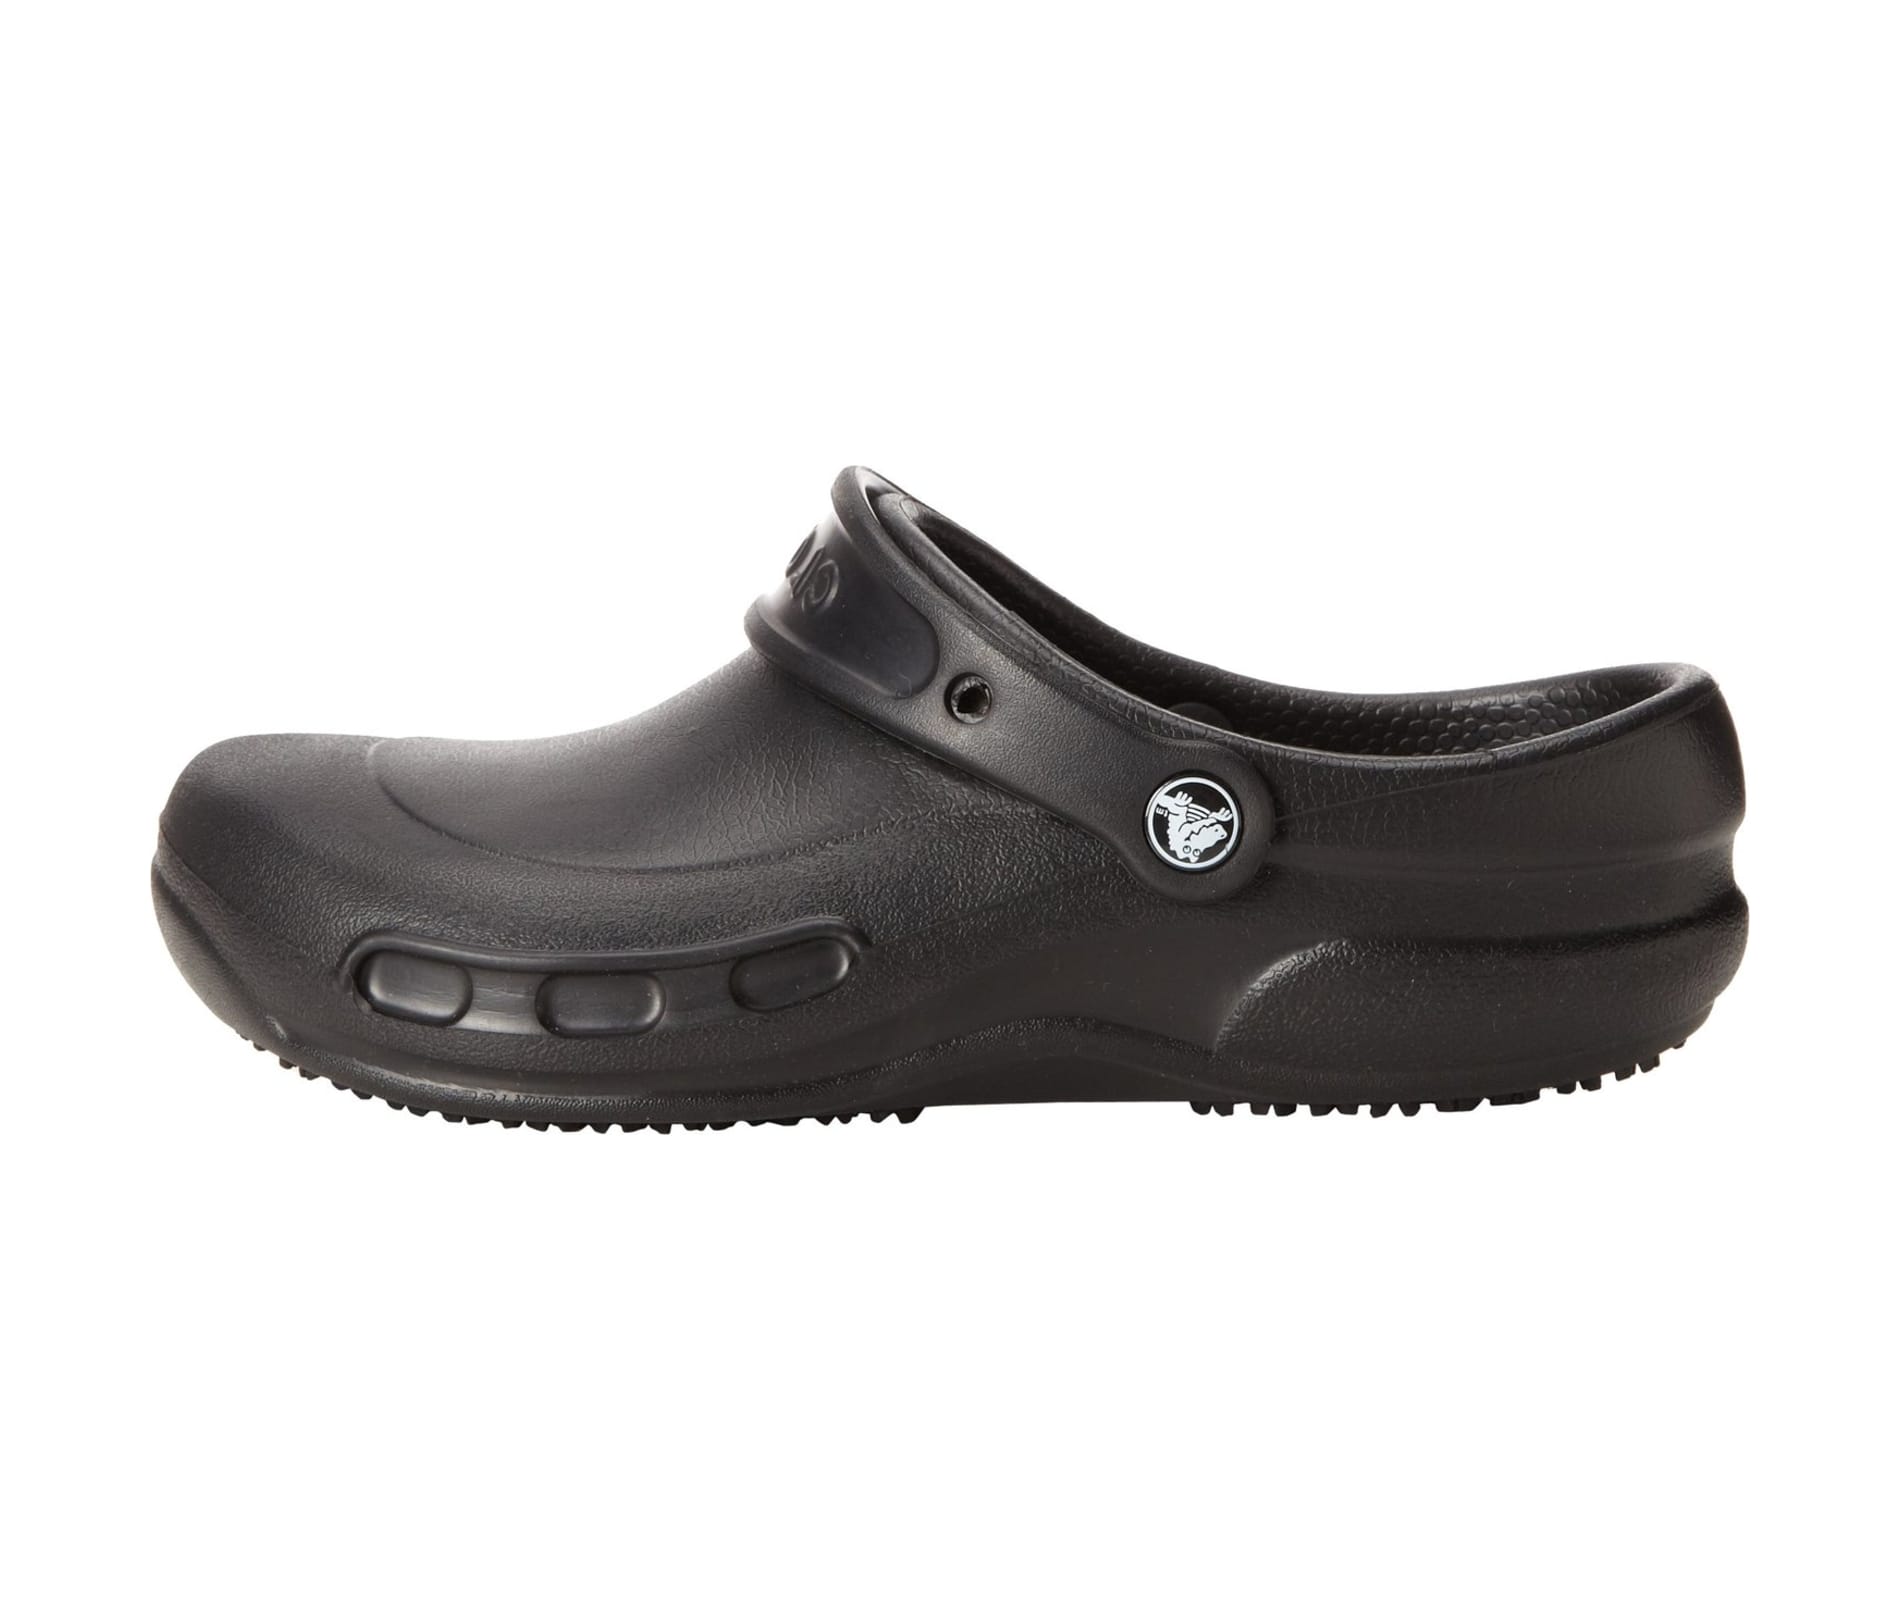 Crocs Bistro Work Shoes Black - M10 / W12